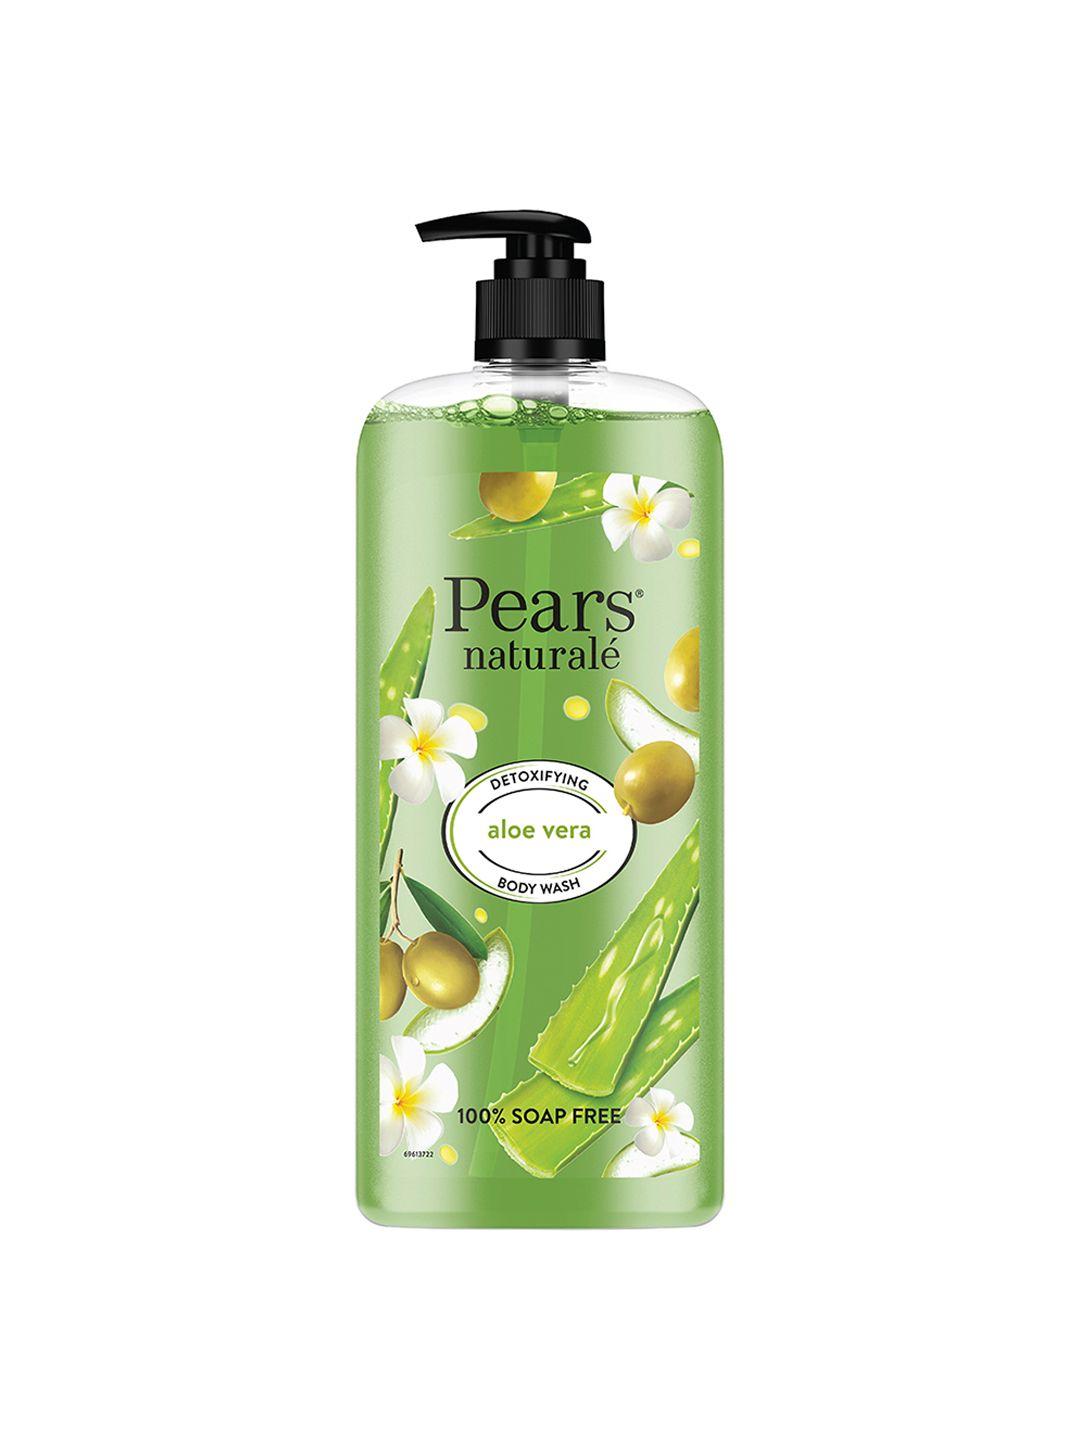 pears naturale detoxifying aloe vera soap-free body wash with olive oil - 750 ml